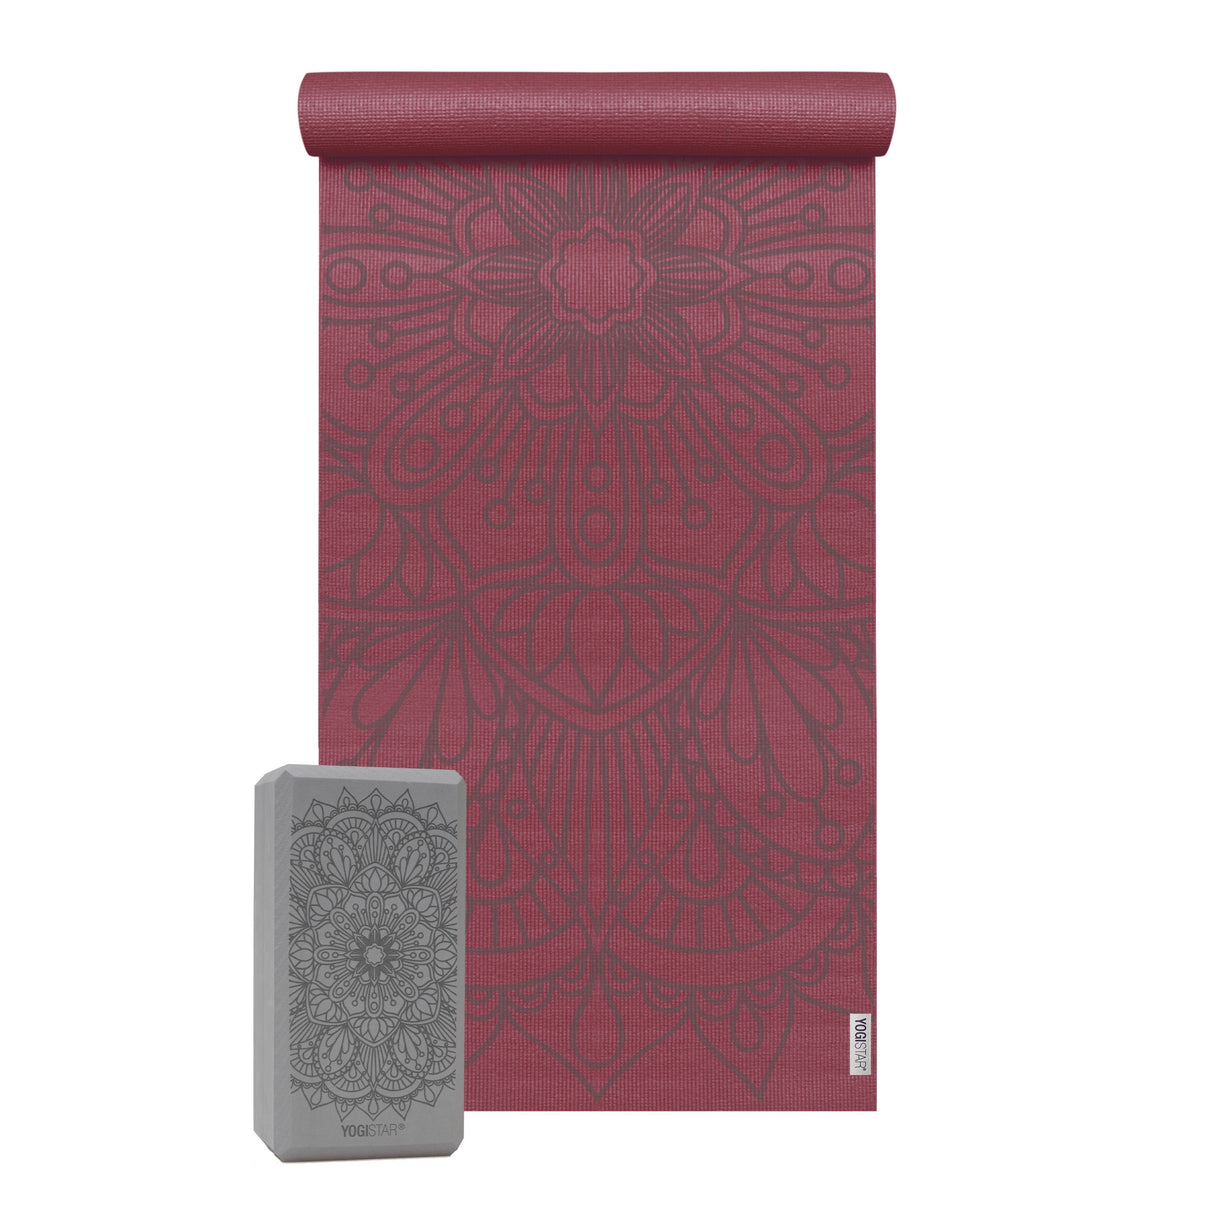 Yoga-Set Starter Edition - lotus mandala (Yogamatte + 1 Yogablock) - bordeaux